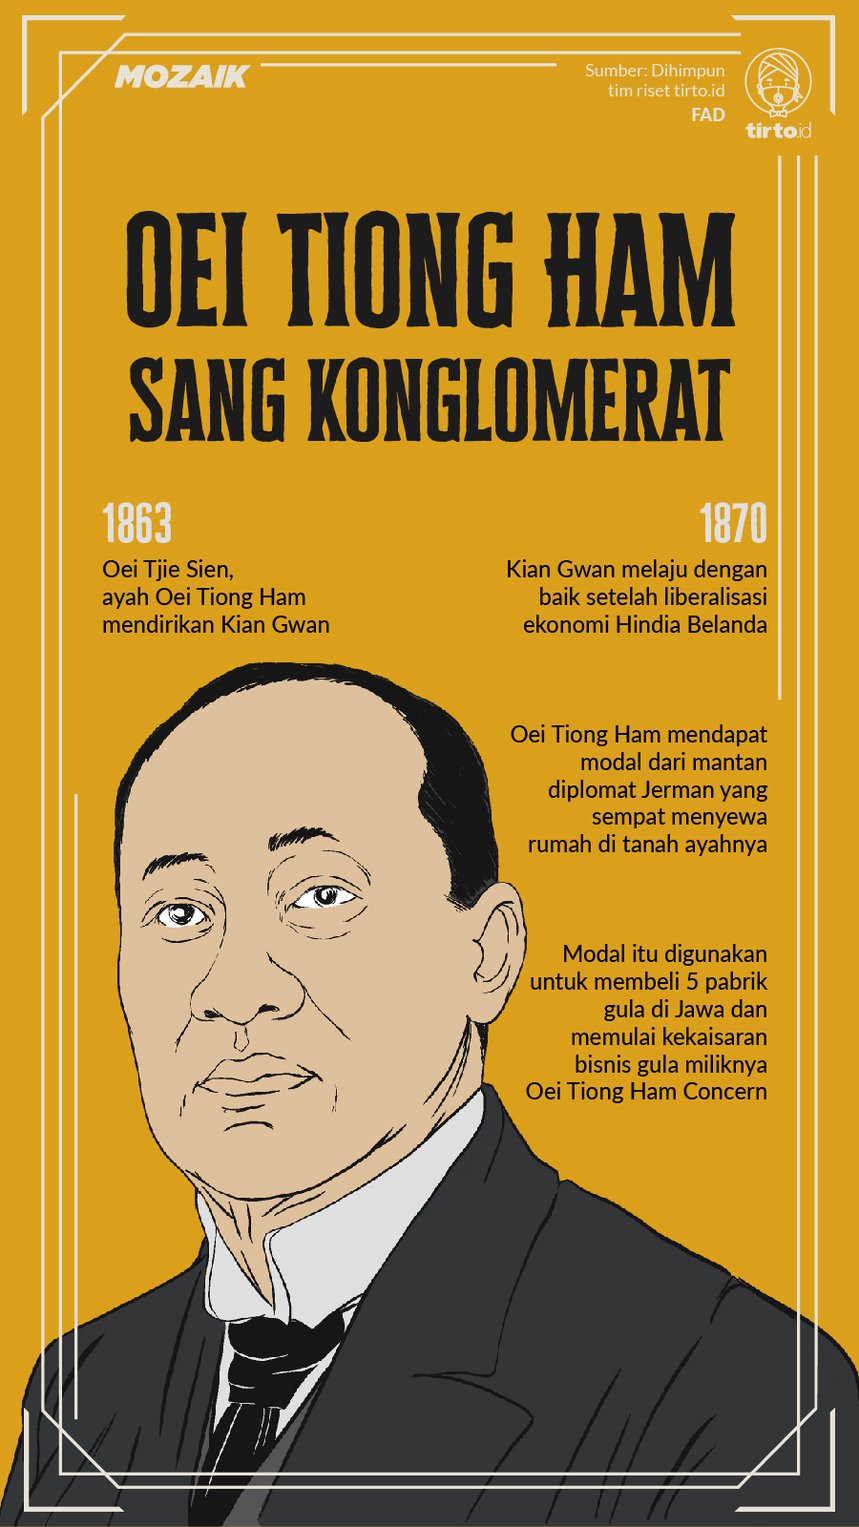 Infografik Mozaik OEI Tiong Ham sang konglomerat